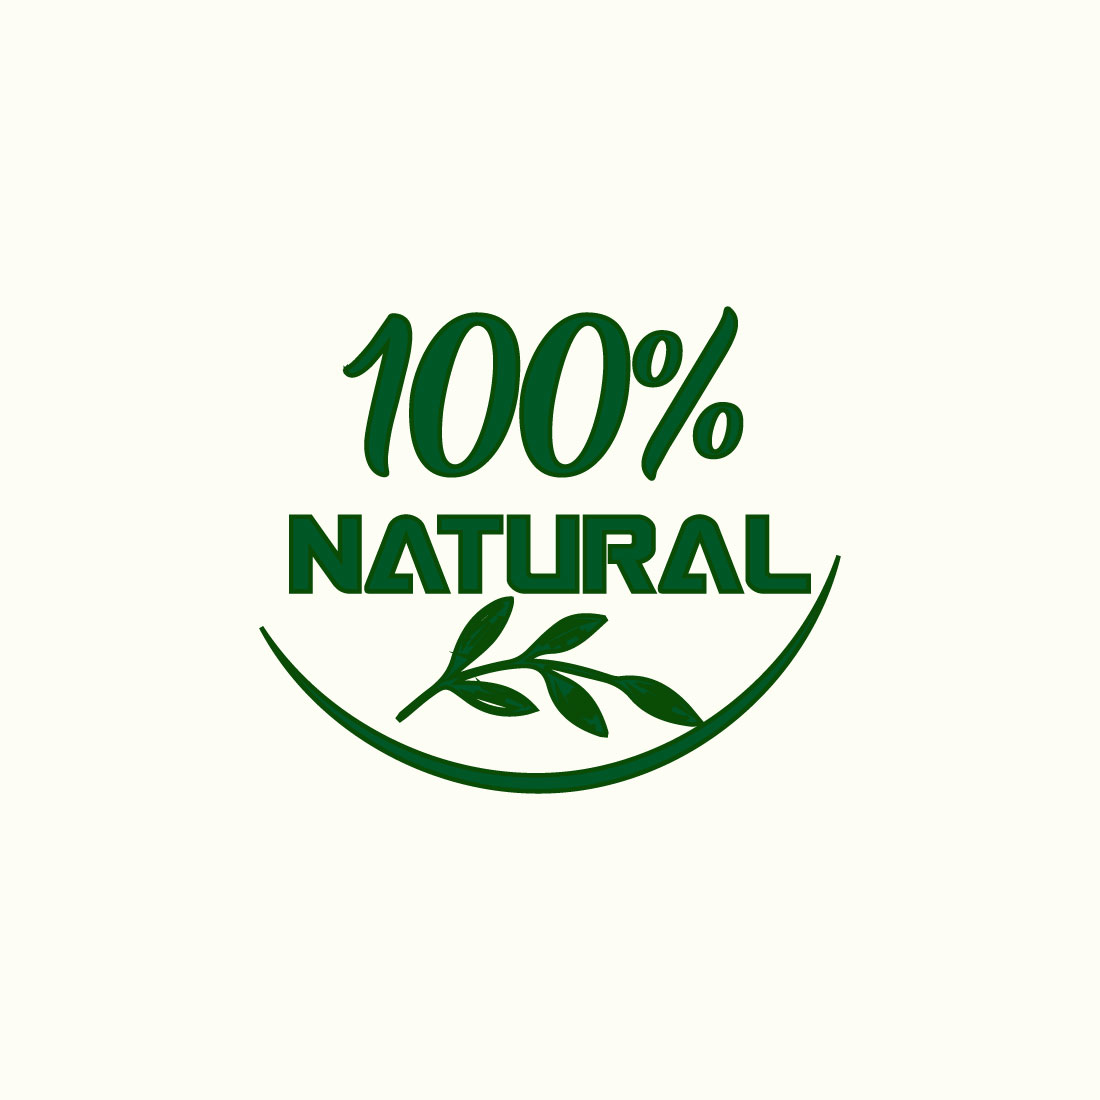 Free natural label logo cover image.